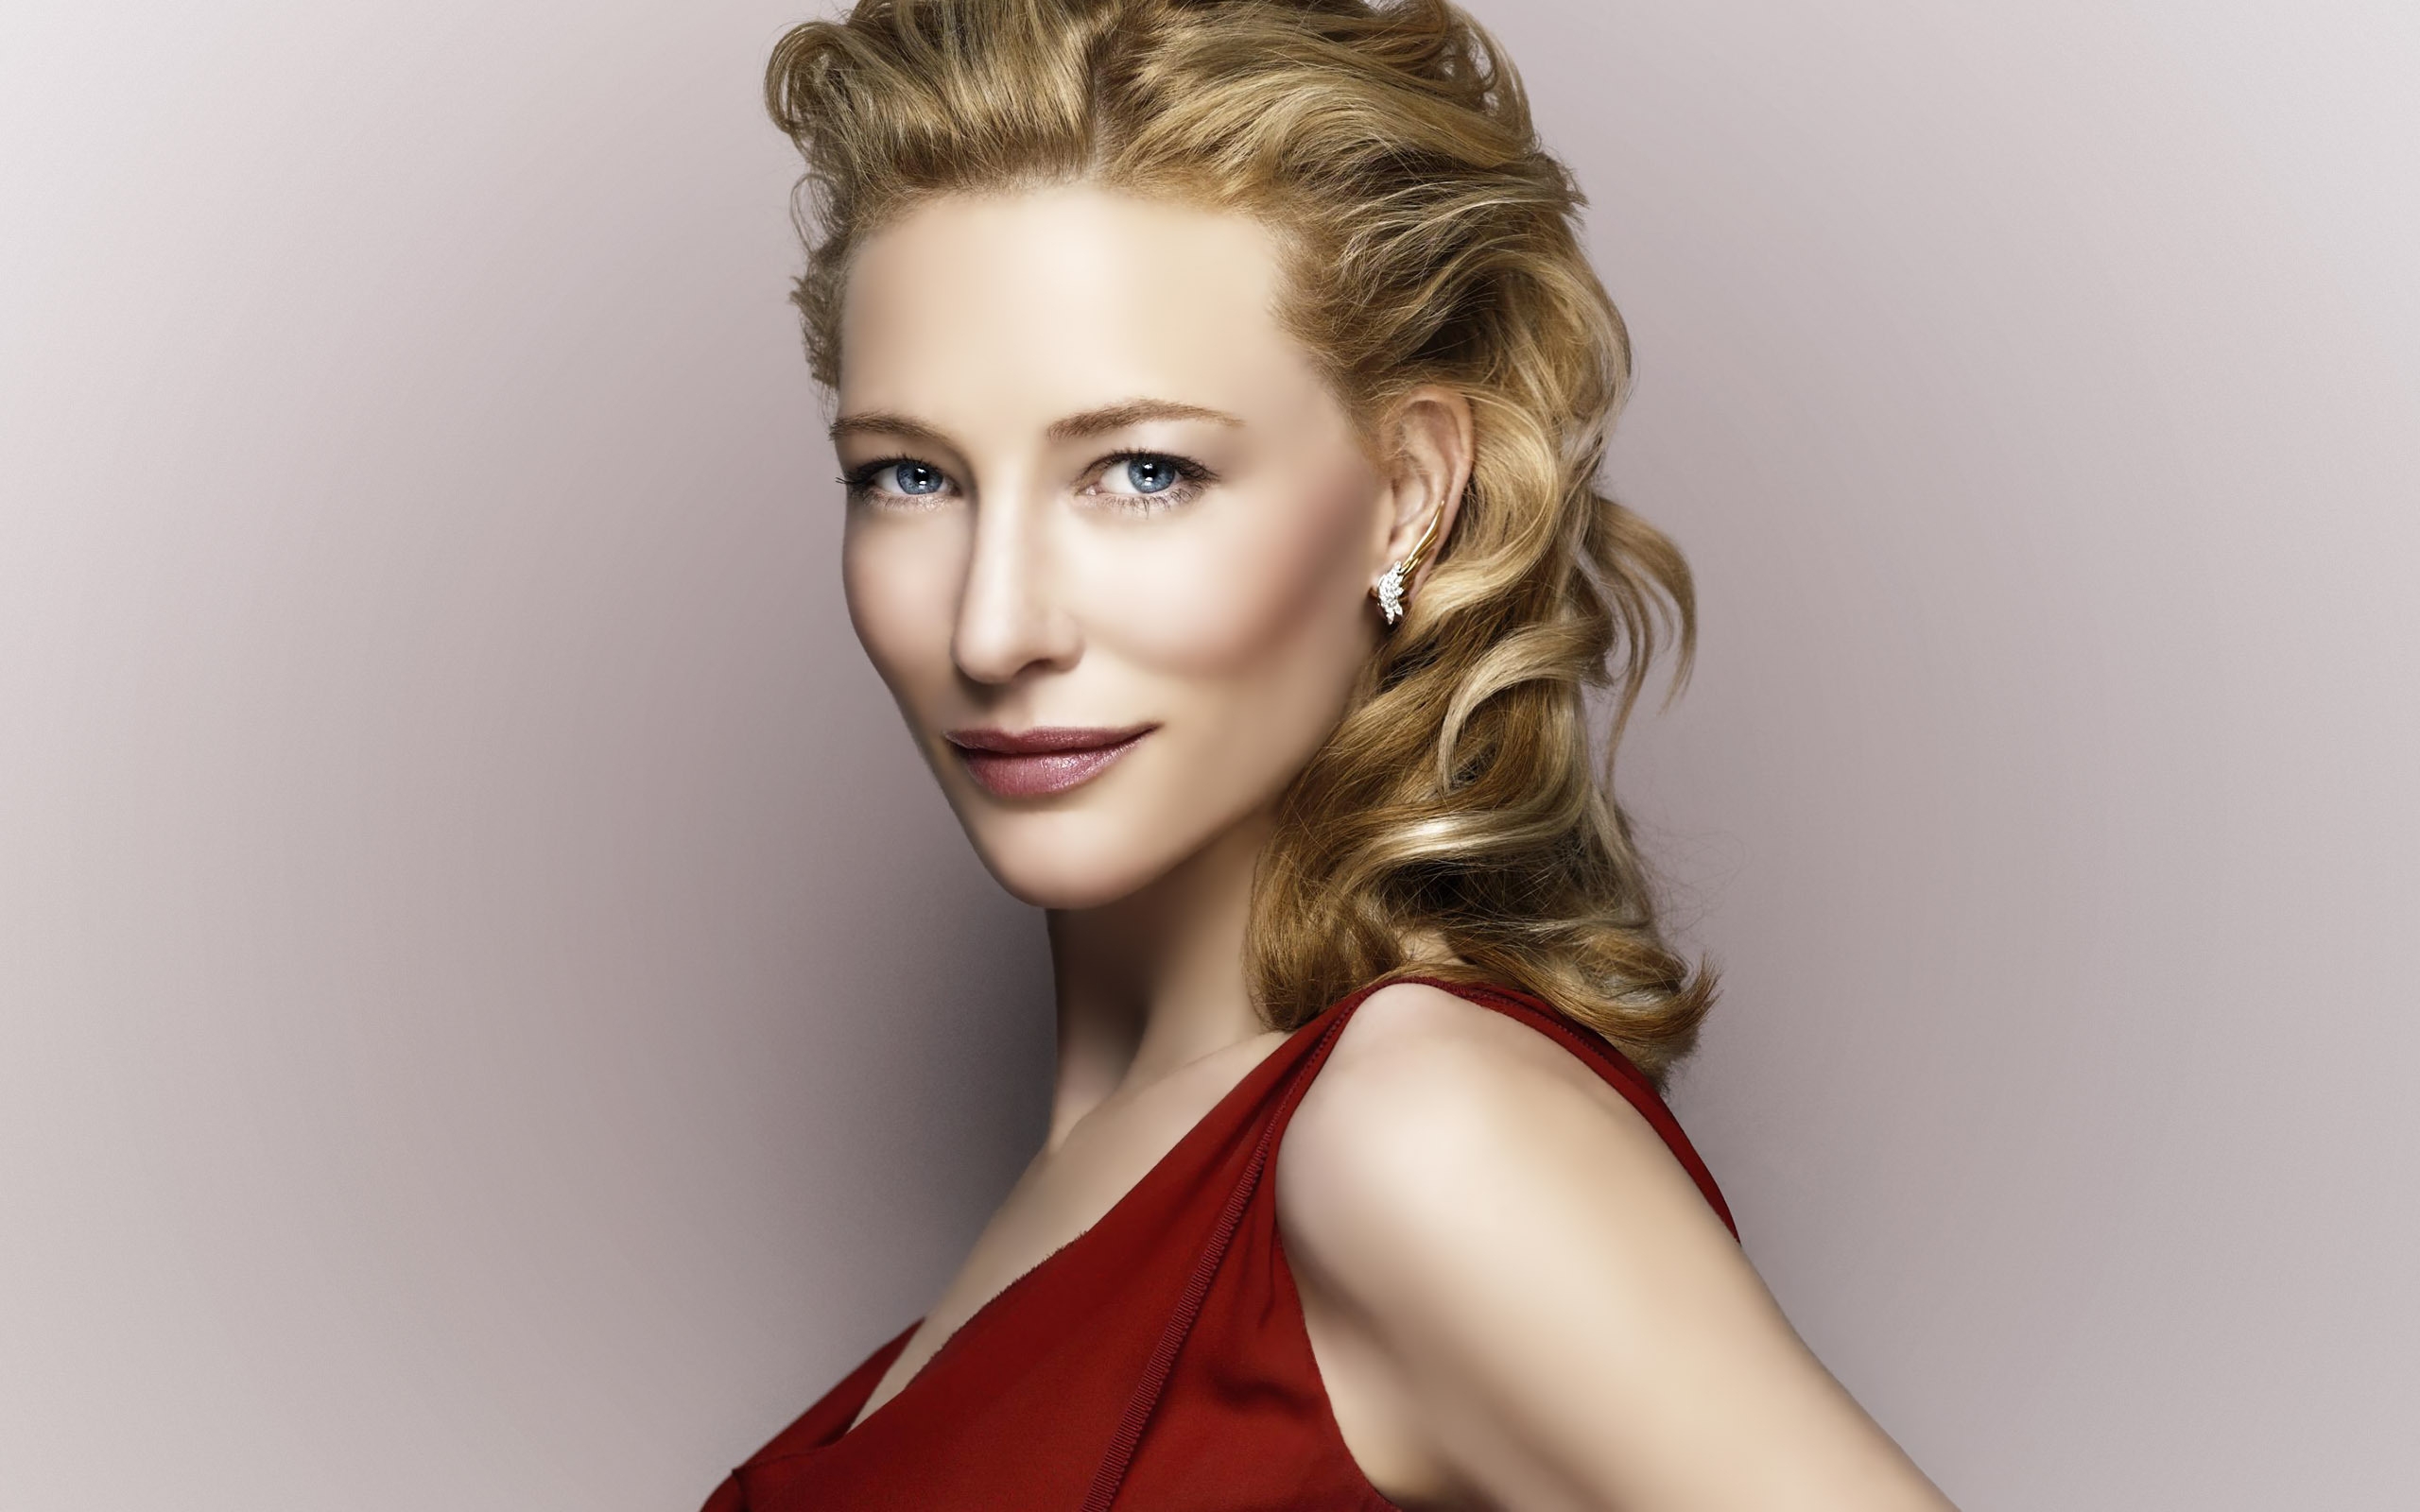 Cate Blanchett for 2560 x 1600 widescreen resolution